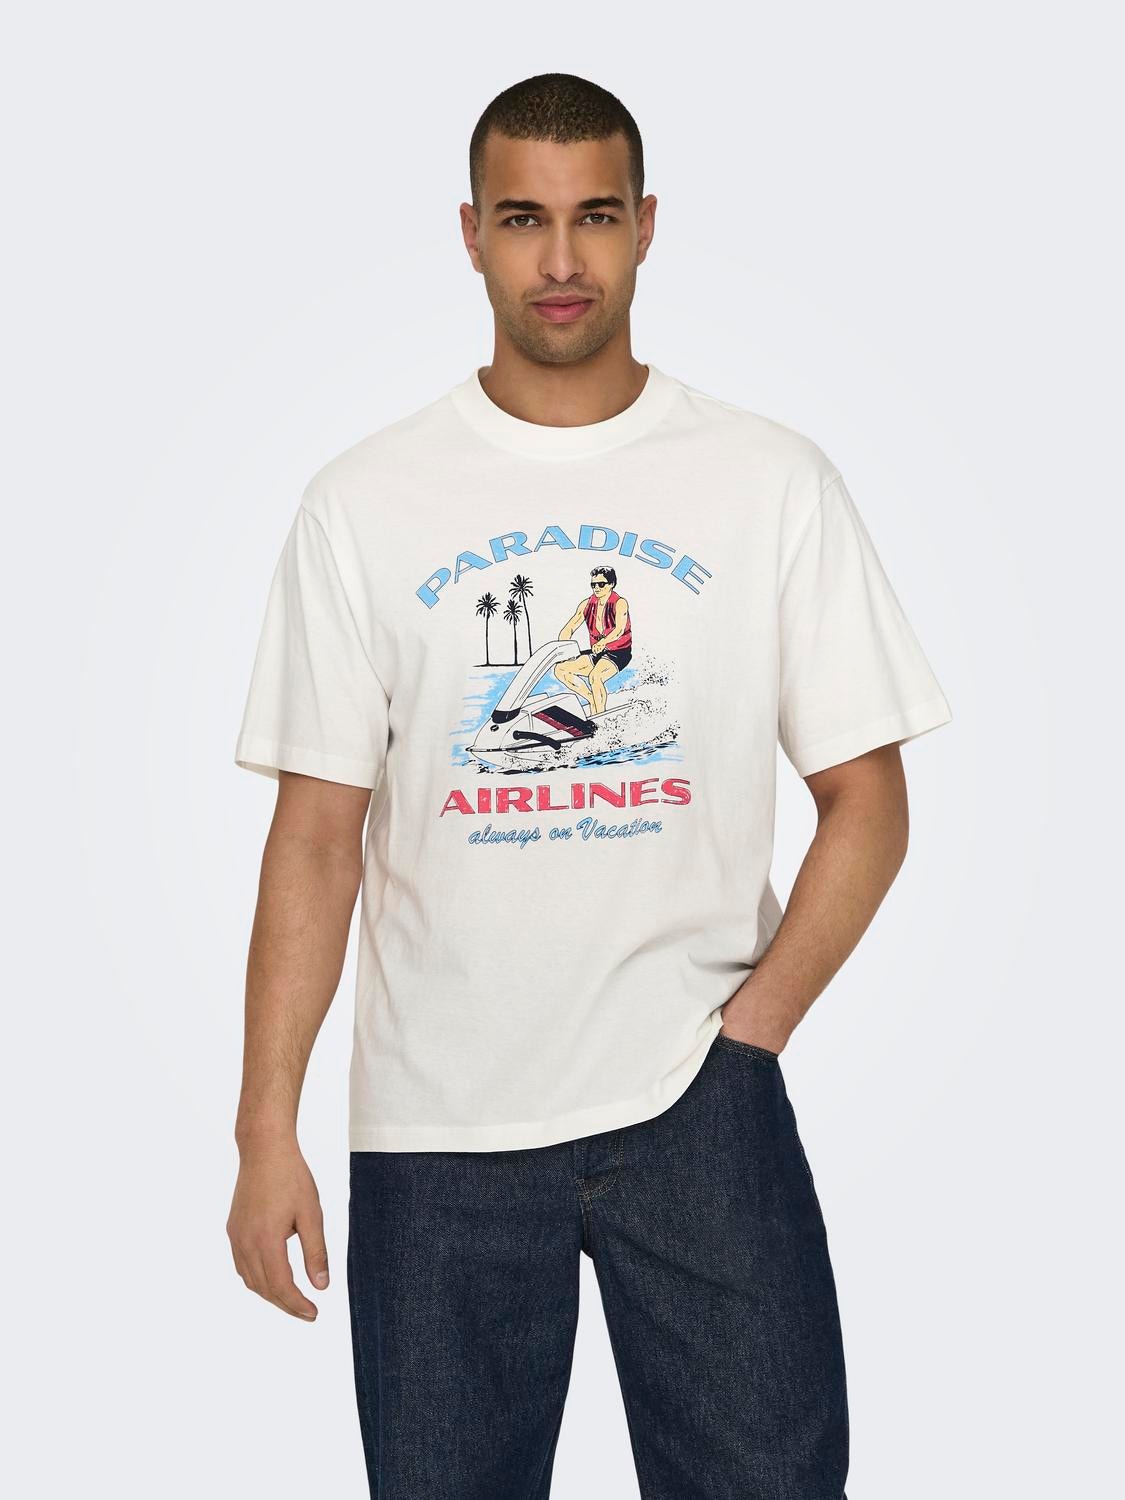 ONLY & SONS O-neck t-shirt -Cloud Dancer - 22029435